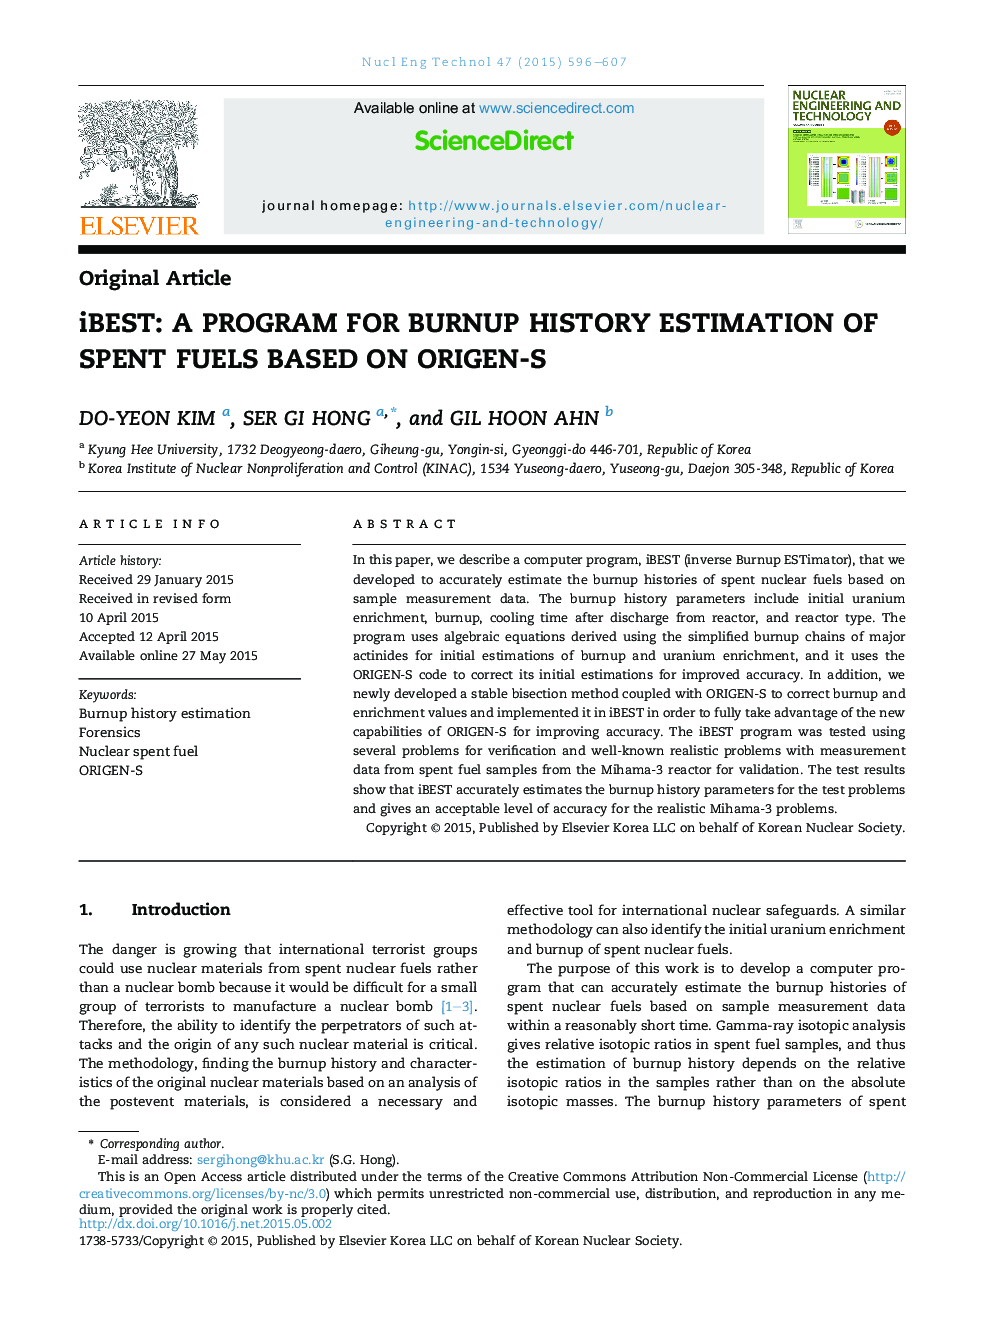 iBEST: a program for burnup history estimation of spent fuels based on ORIGEN-S 